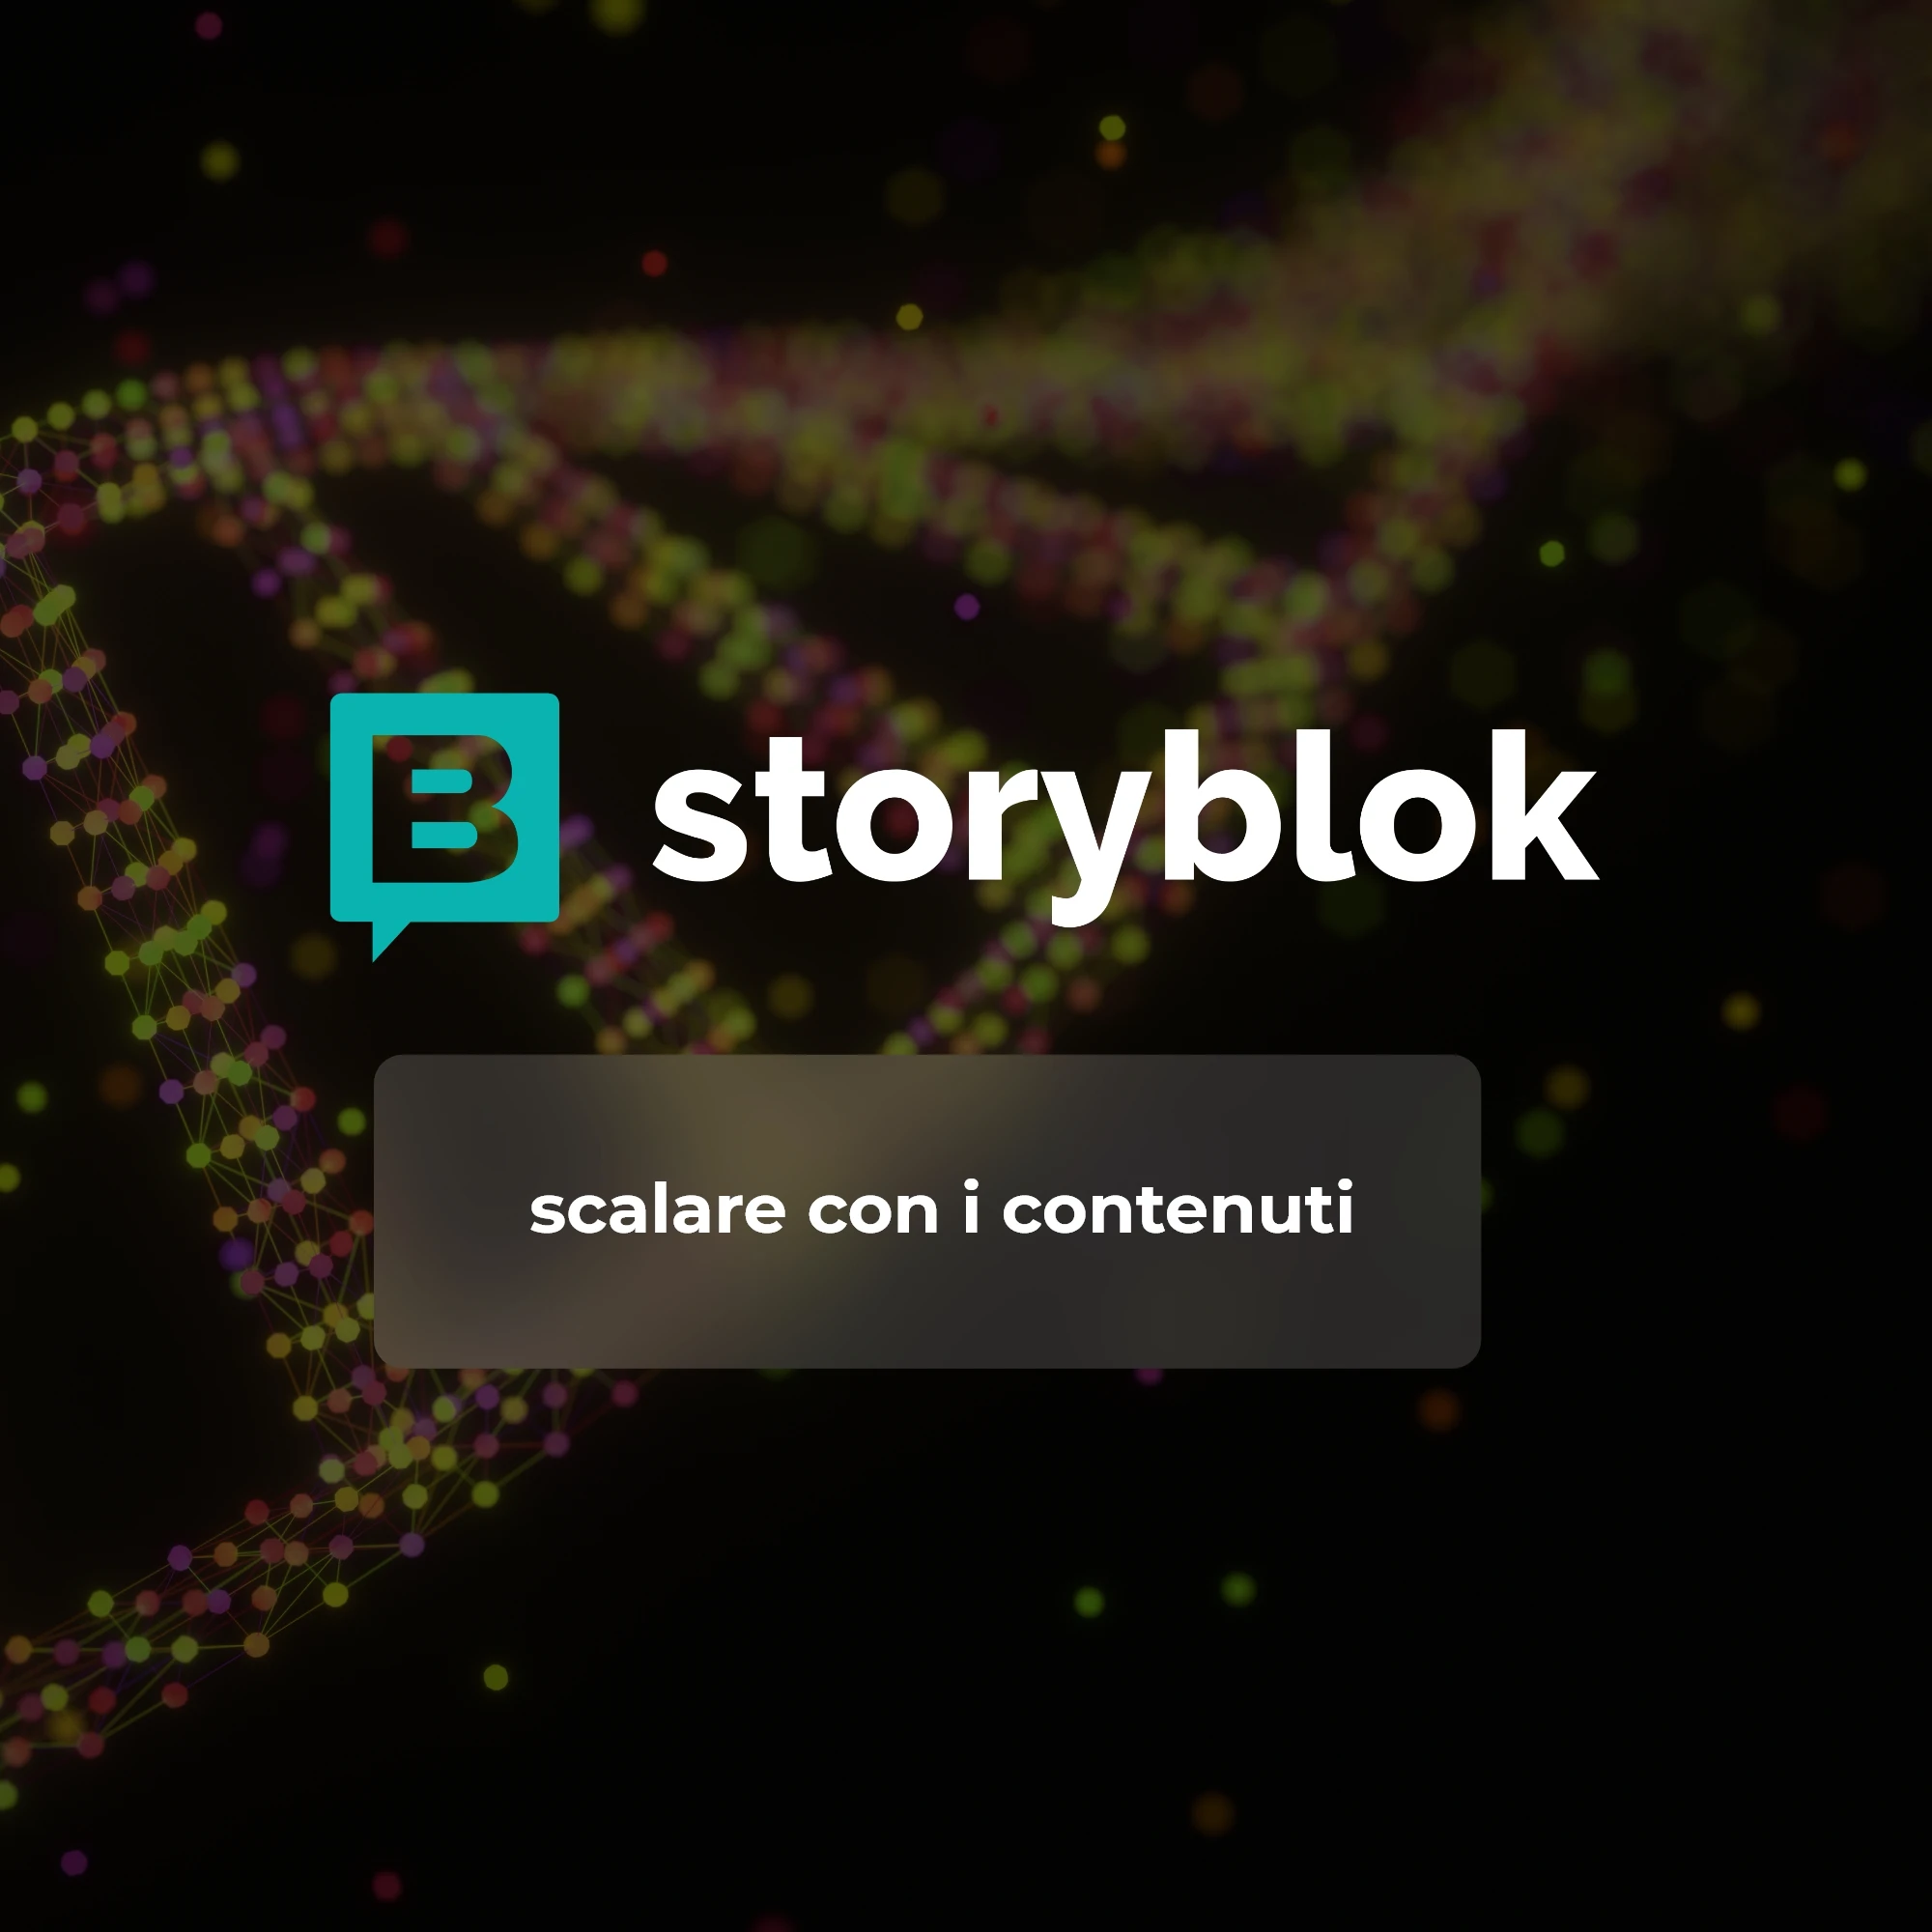 Il nostro partner’s ecosystem_Storyblok W.Claim – 1